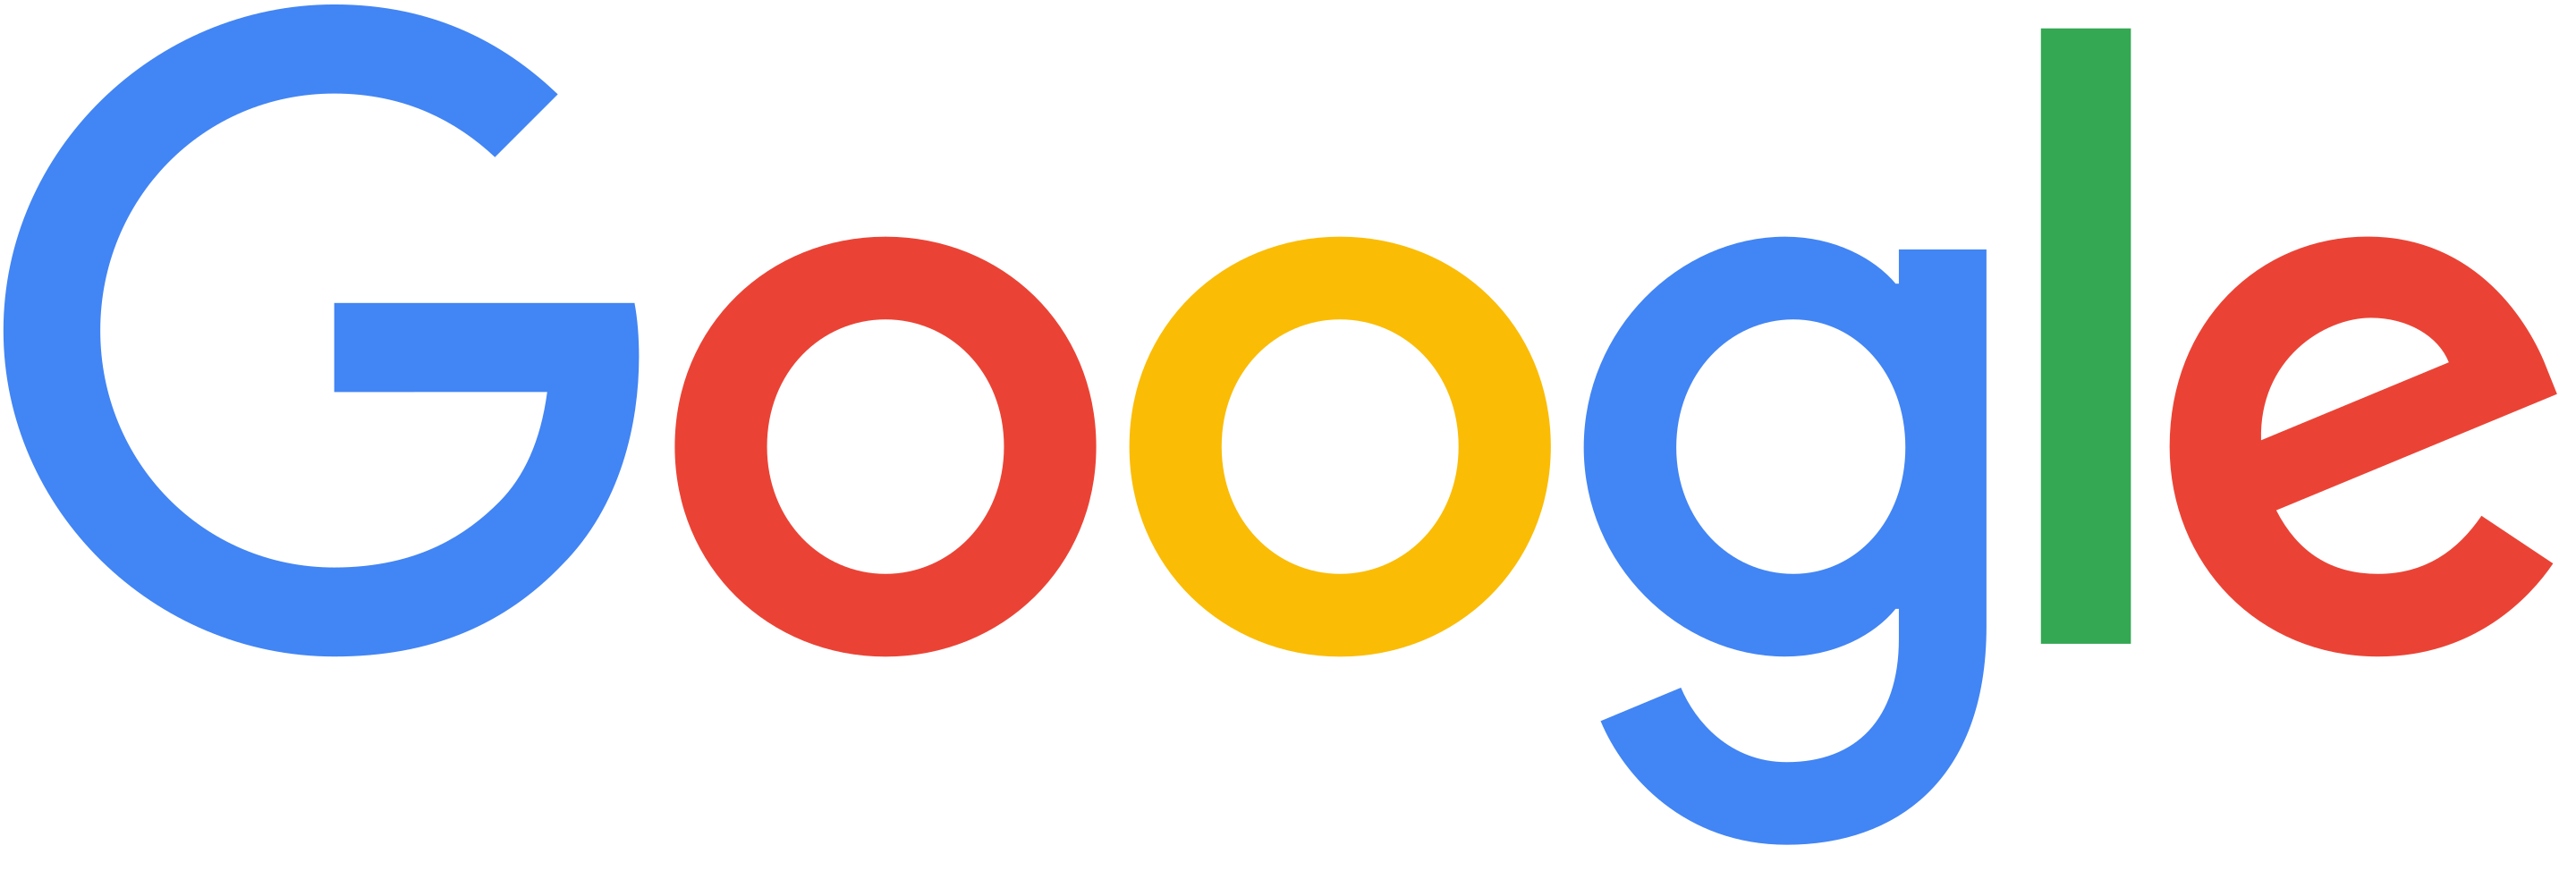 Google website